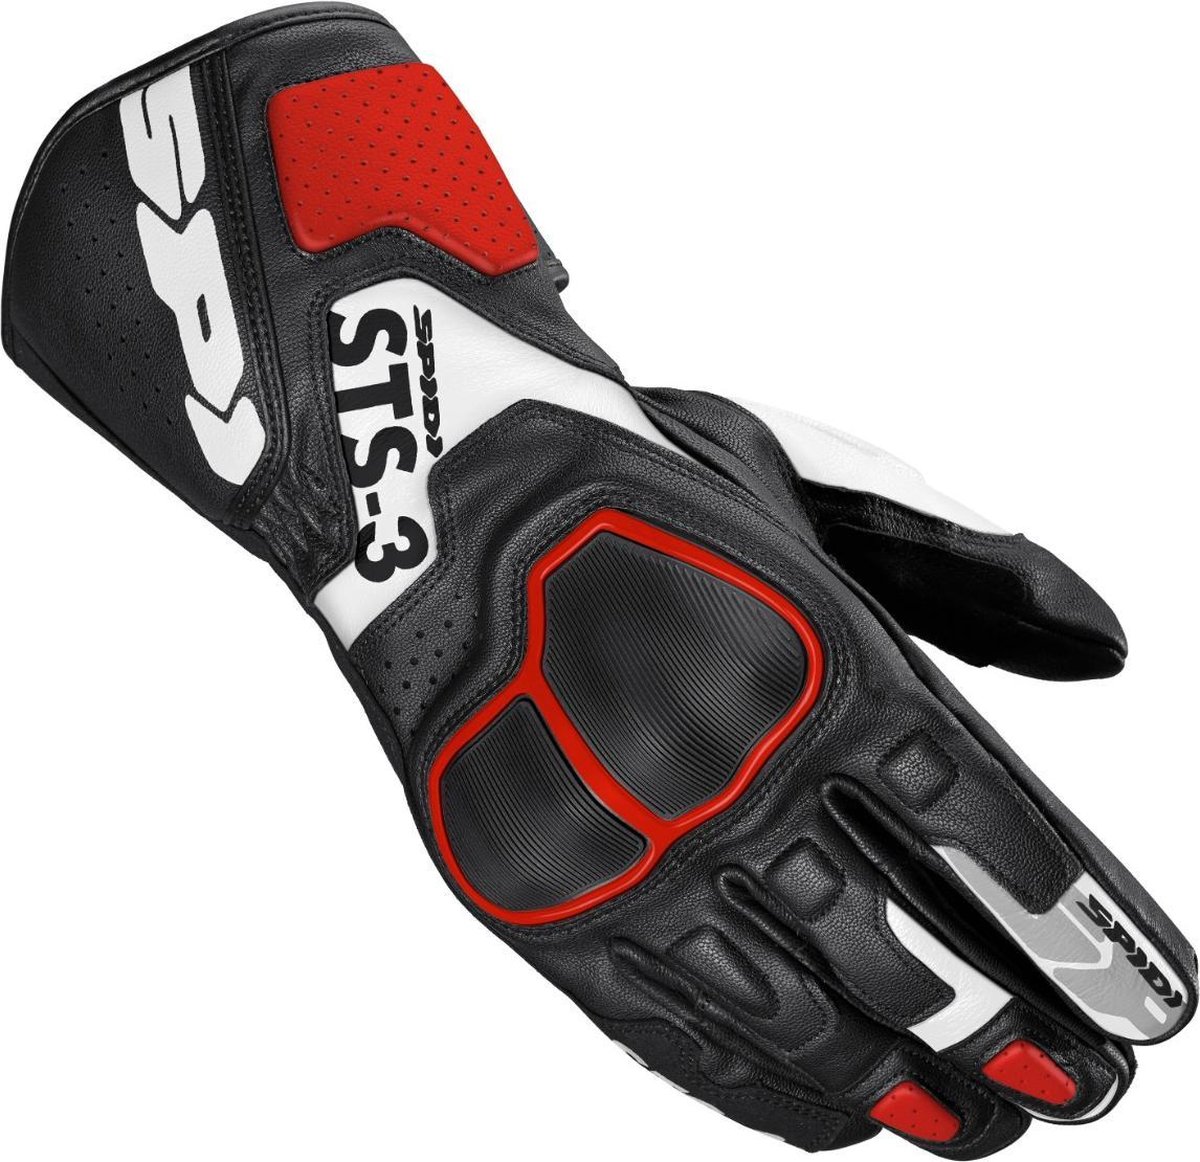 Spidi Sts-3 Red Motorcycle Gloves L - Maat L - Handschoen